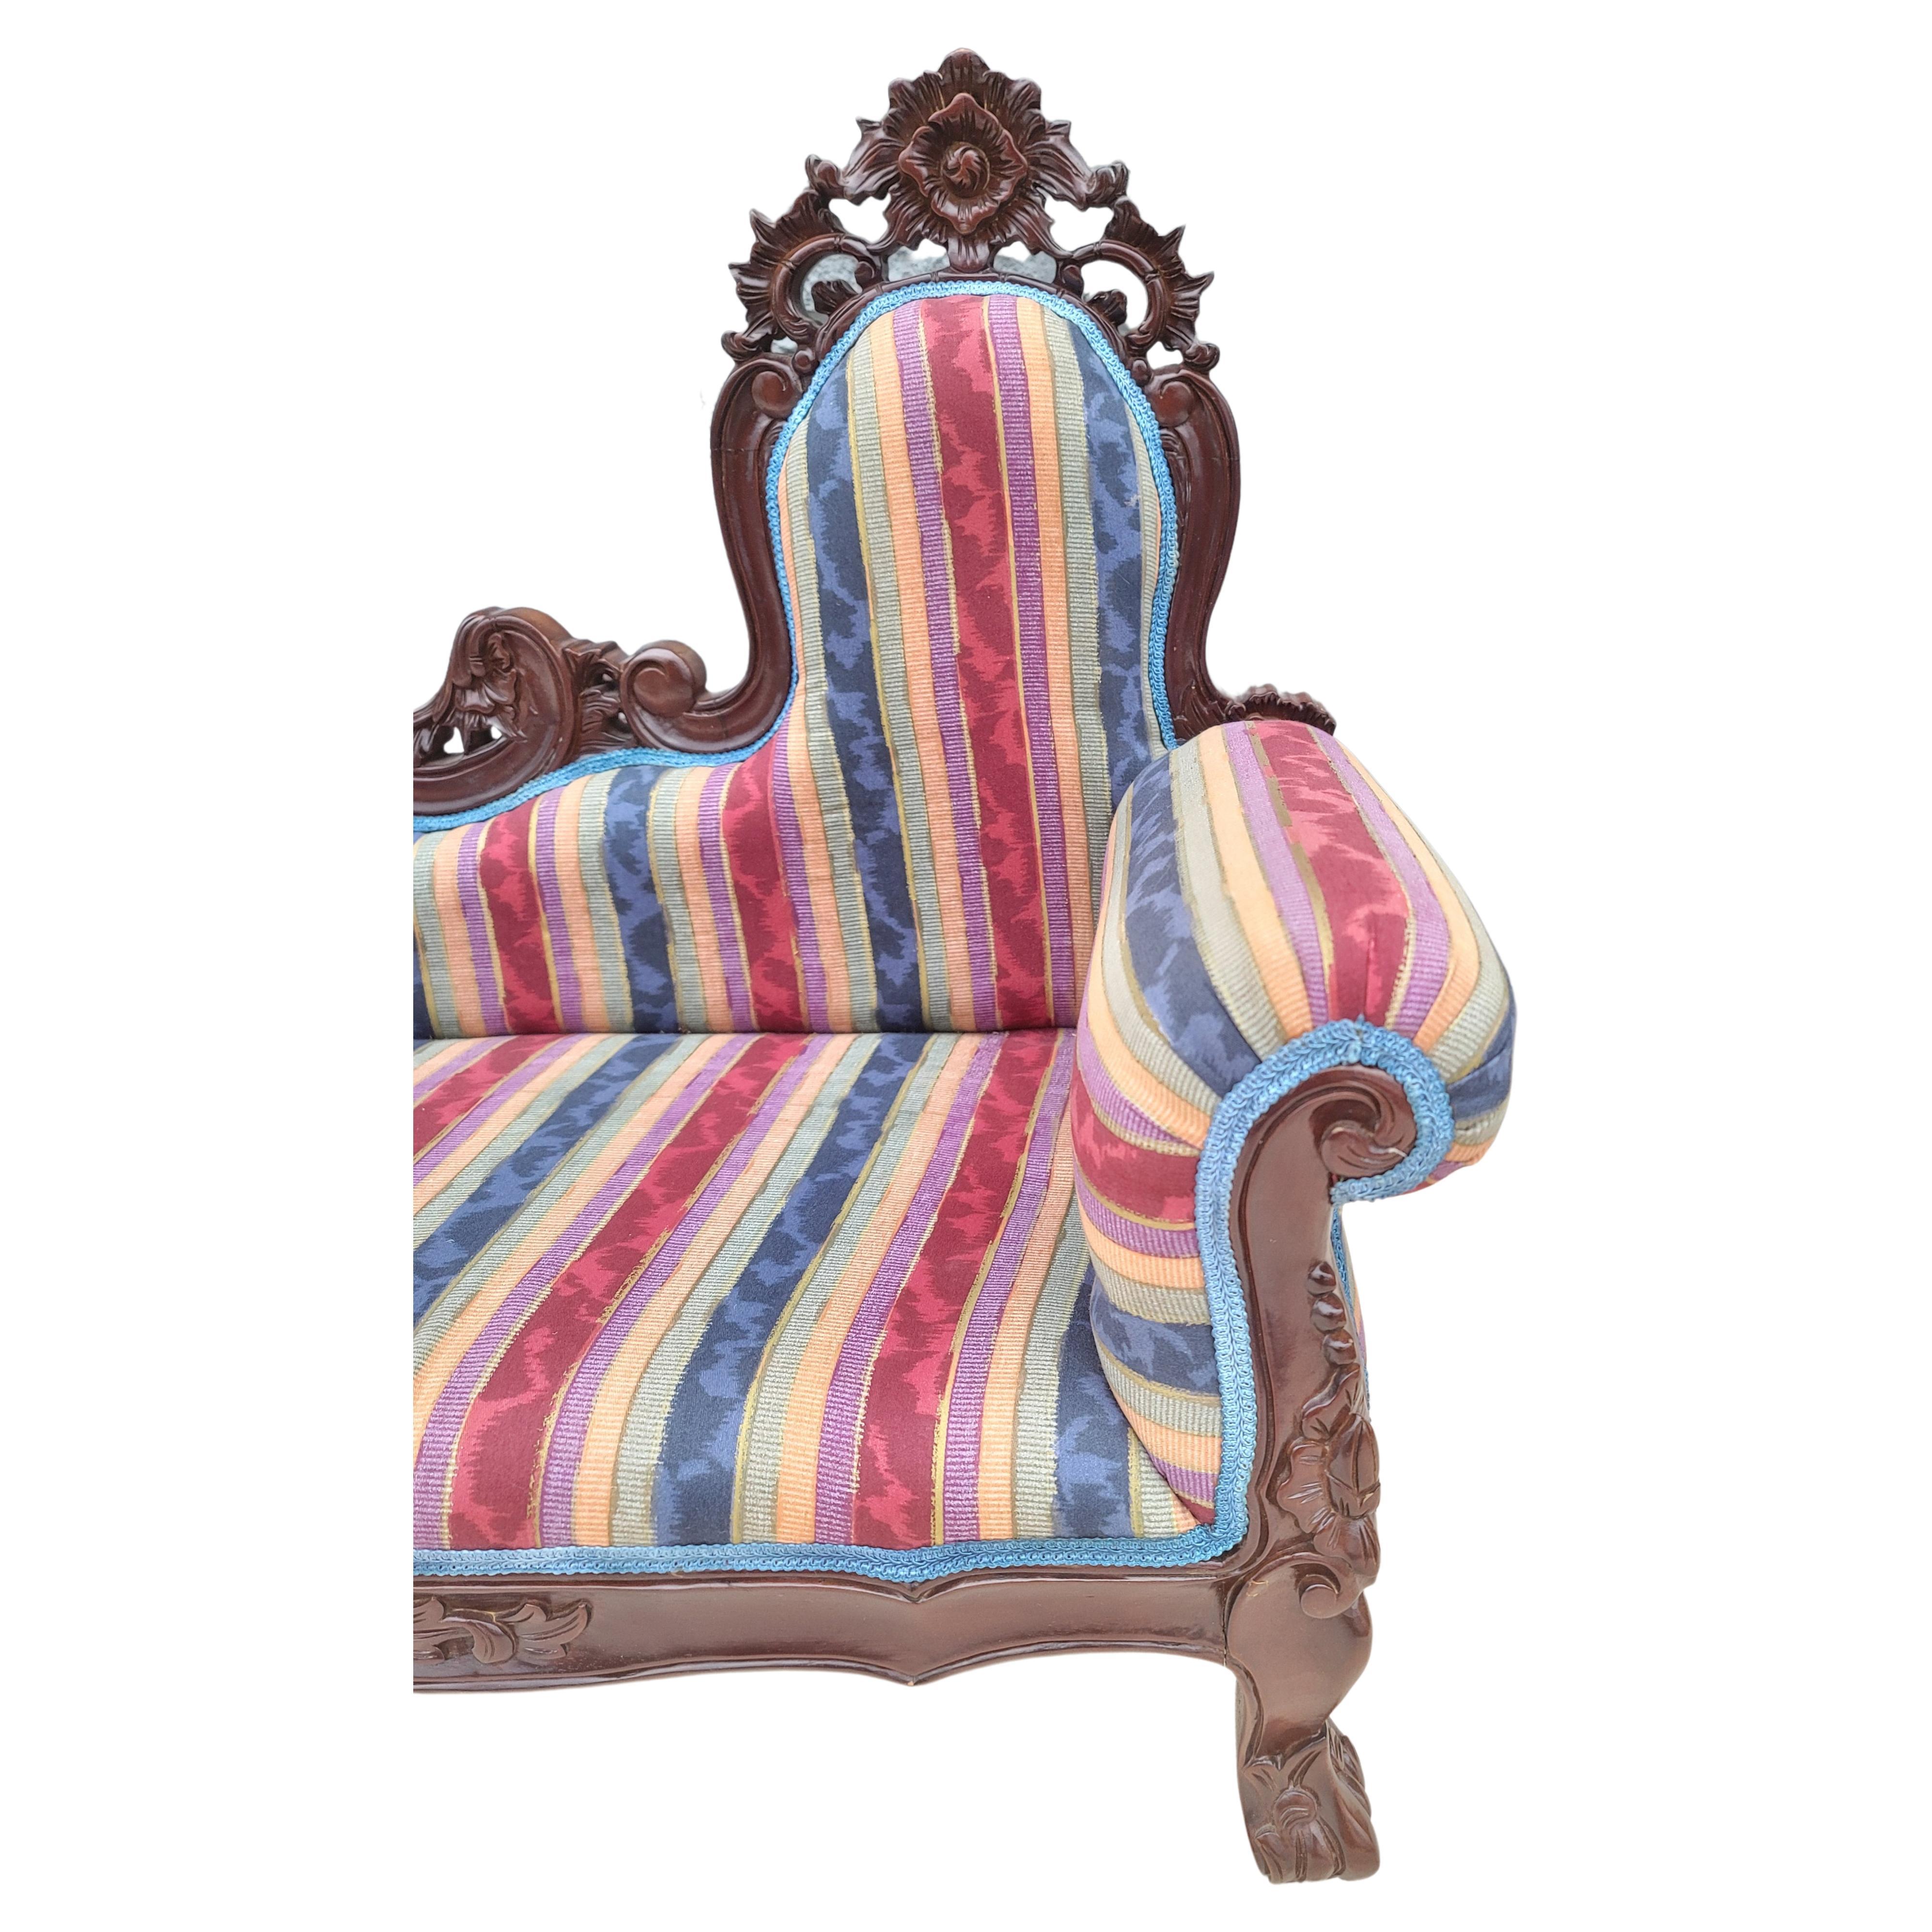 chaise lounge size -china -b2b -forum -blog -wikipedia -.cn -.gov -alibaba